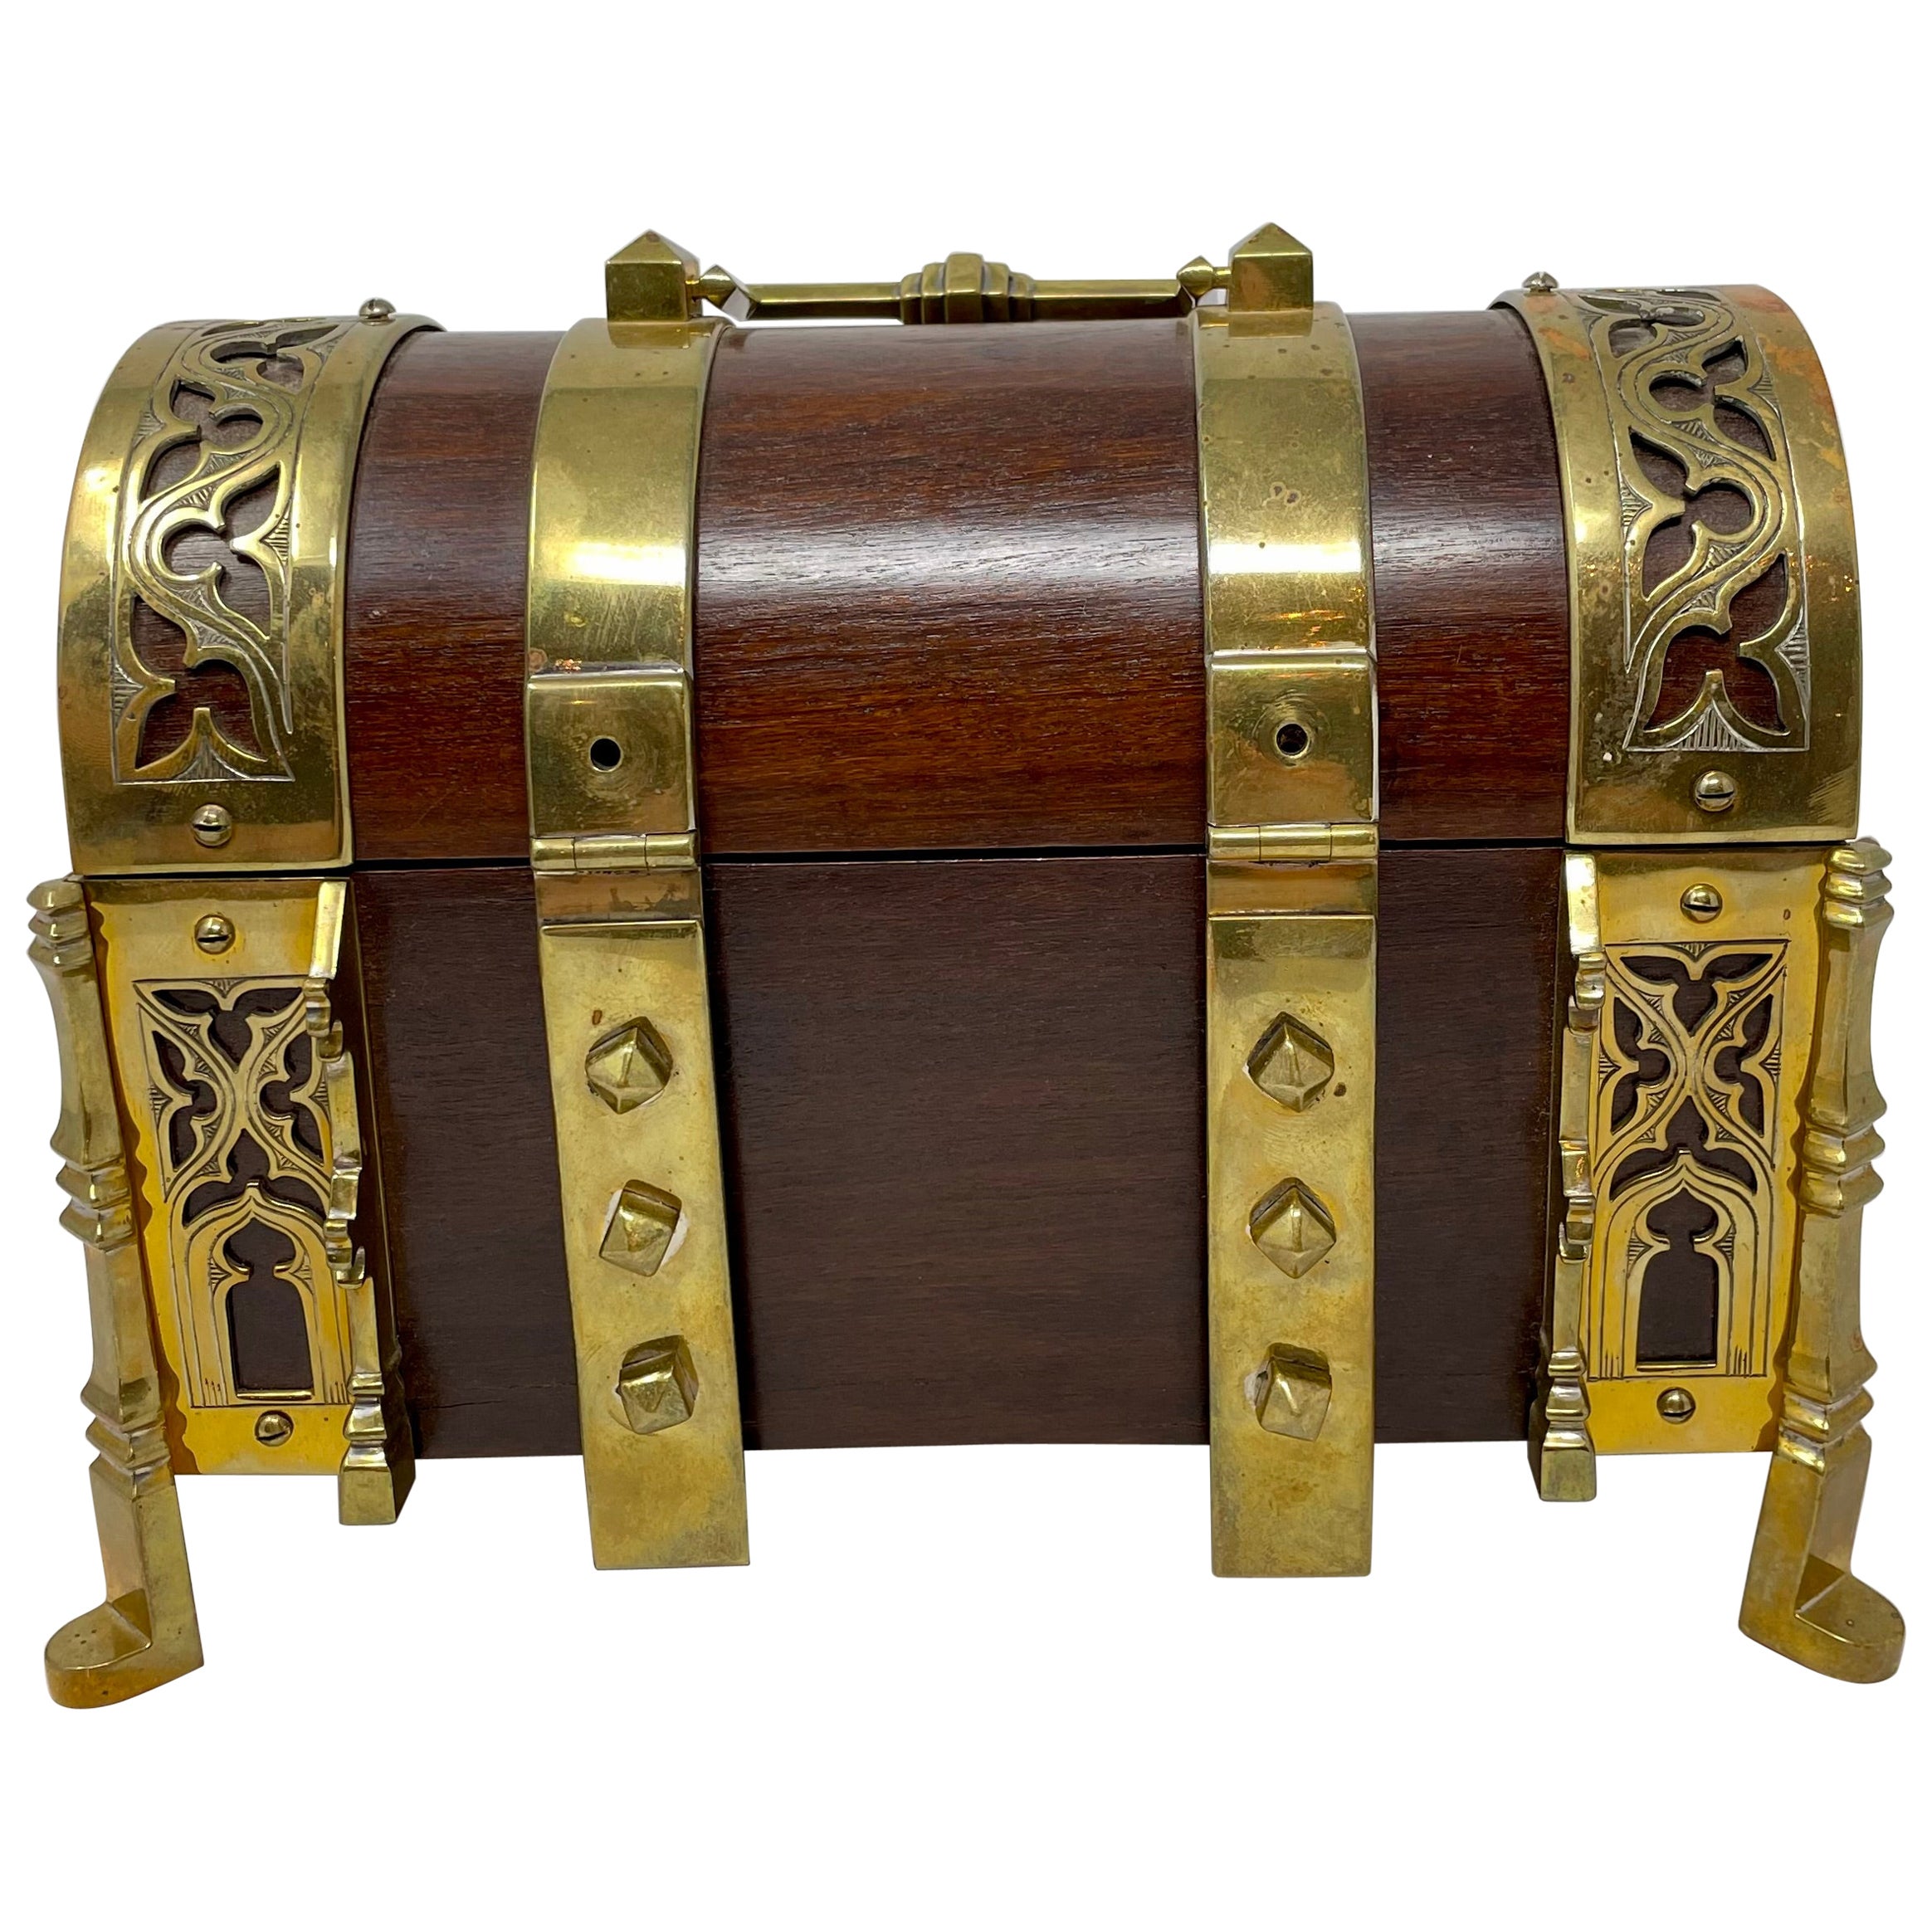 Antique English Mahogany with Brass Mounts Footed Jewel Box, Circa 1860.